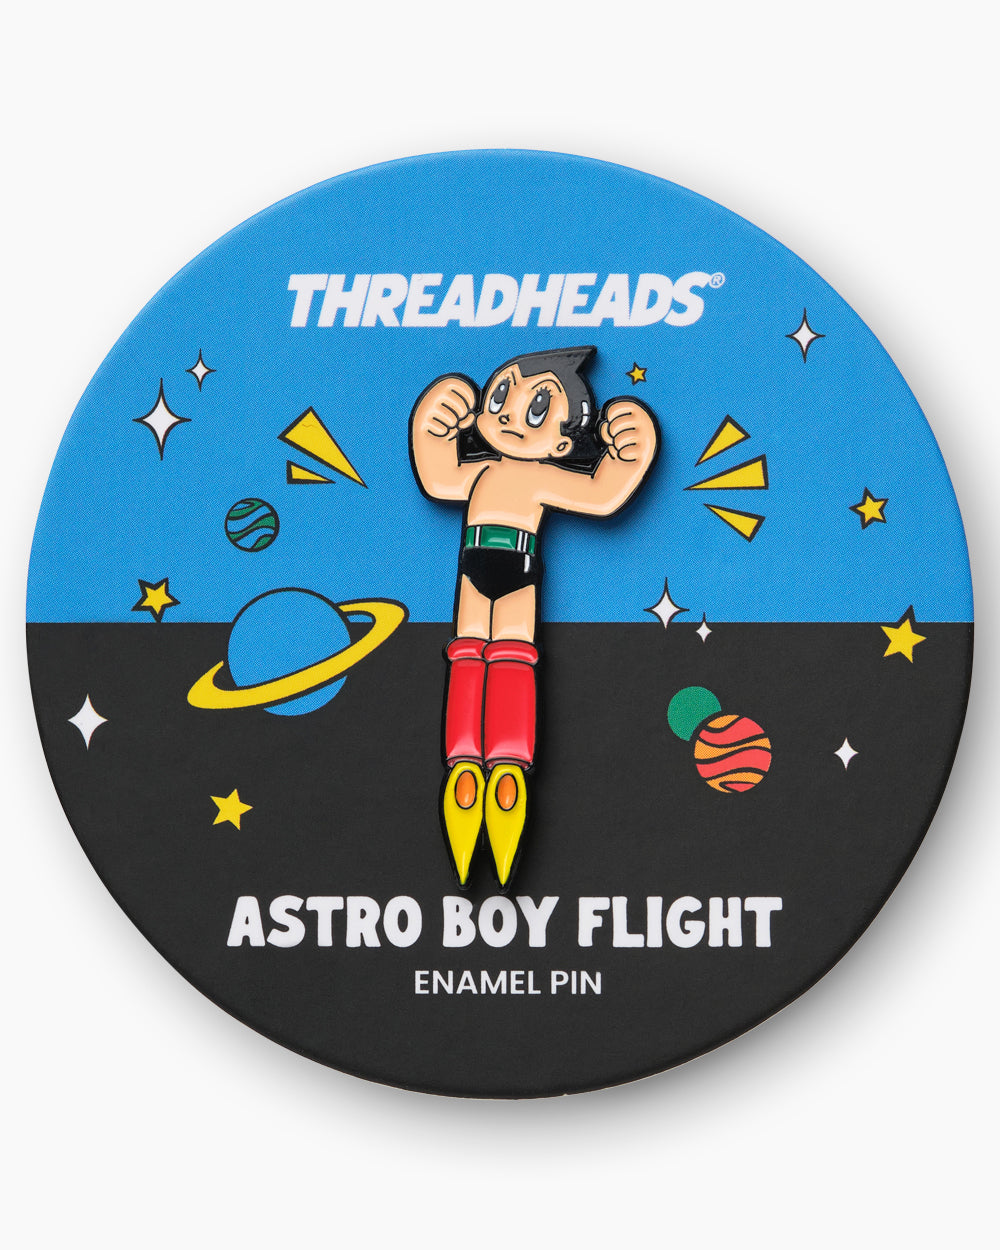 Astro boy Flight Enamel Pin | Threadheads Exclusive